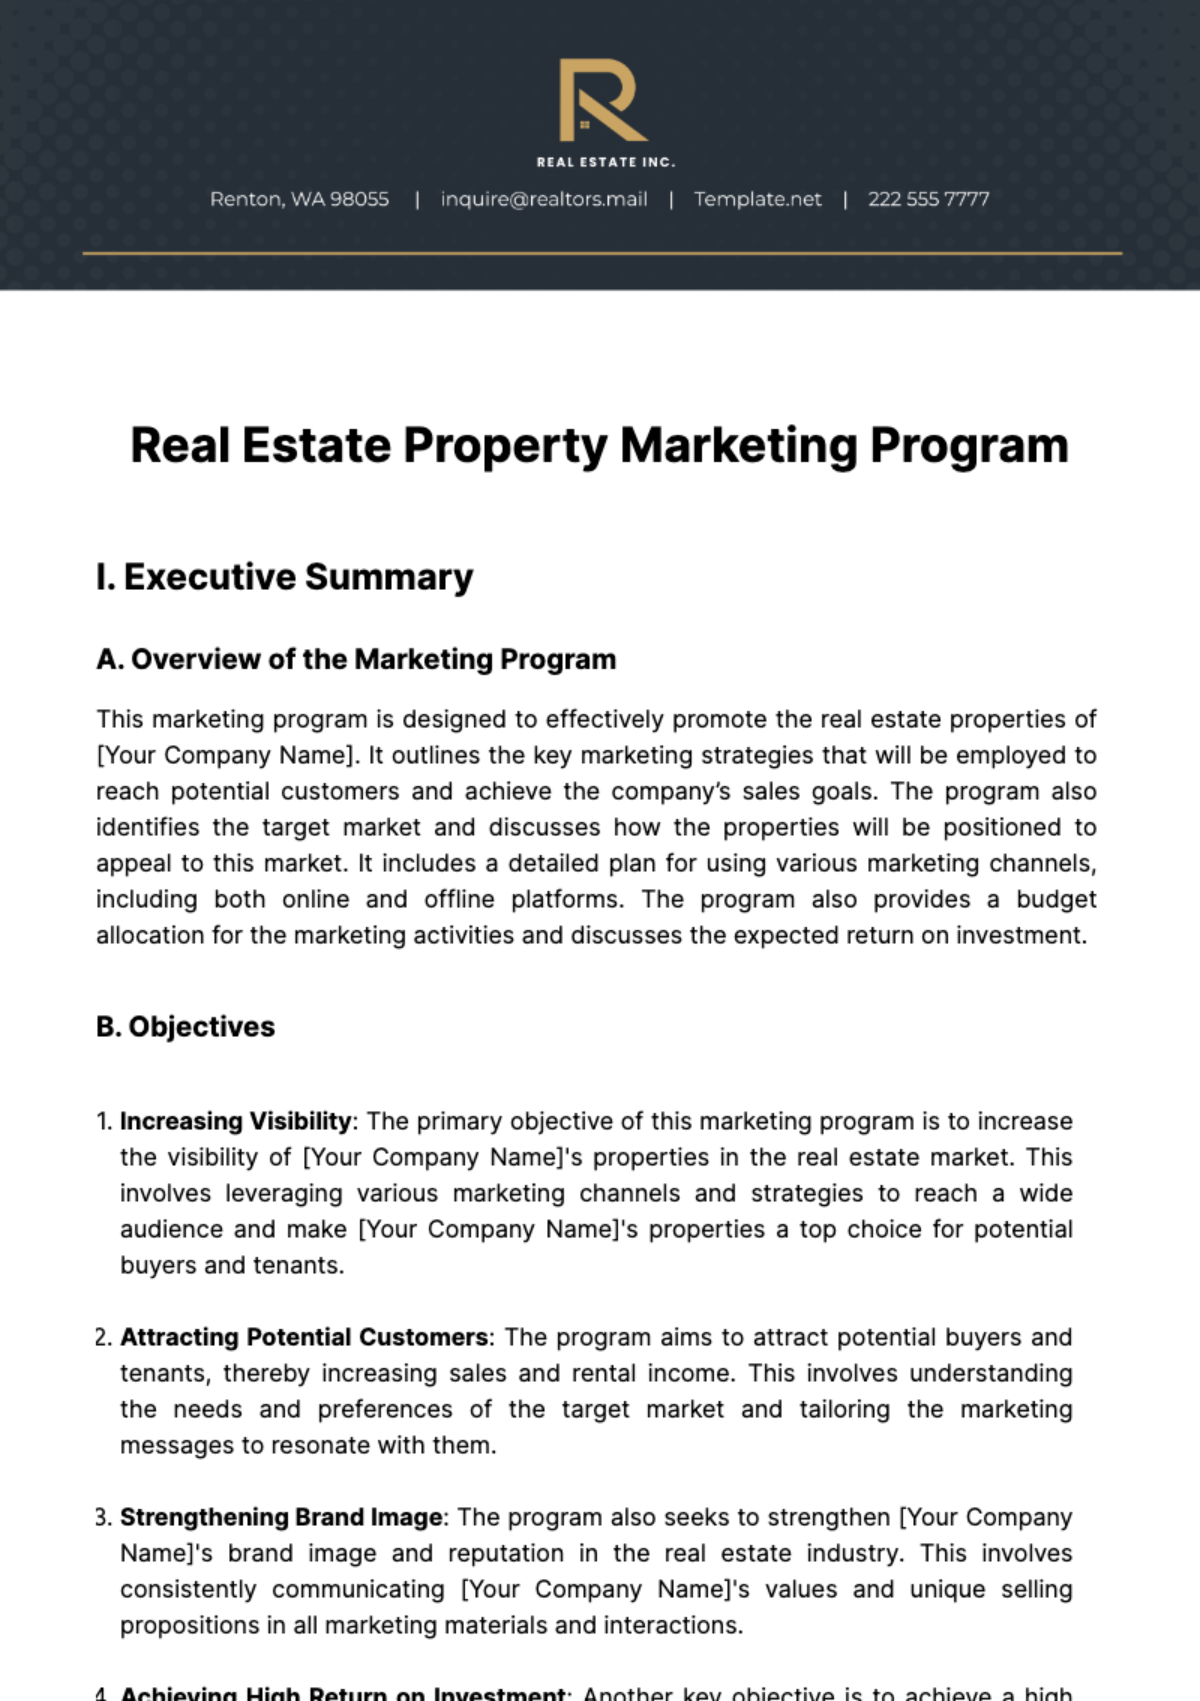 Real Estate Property Marketing Program Template